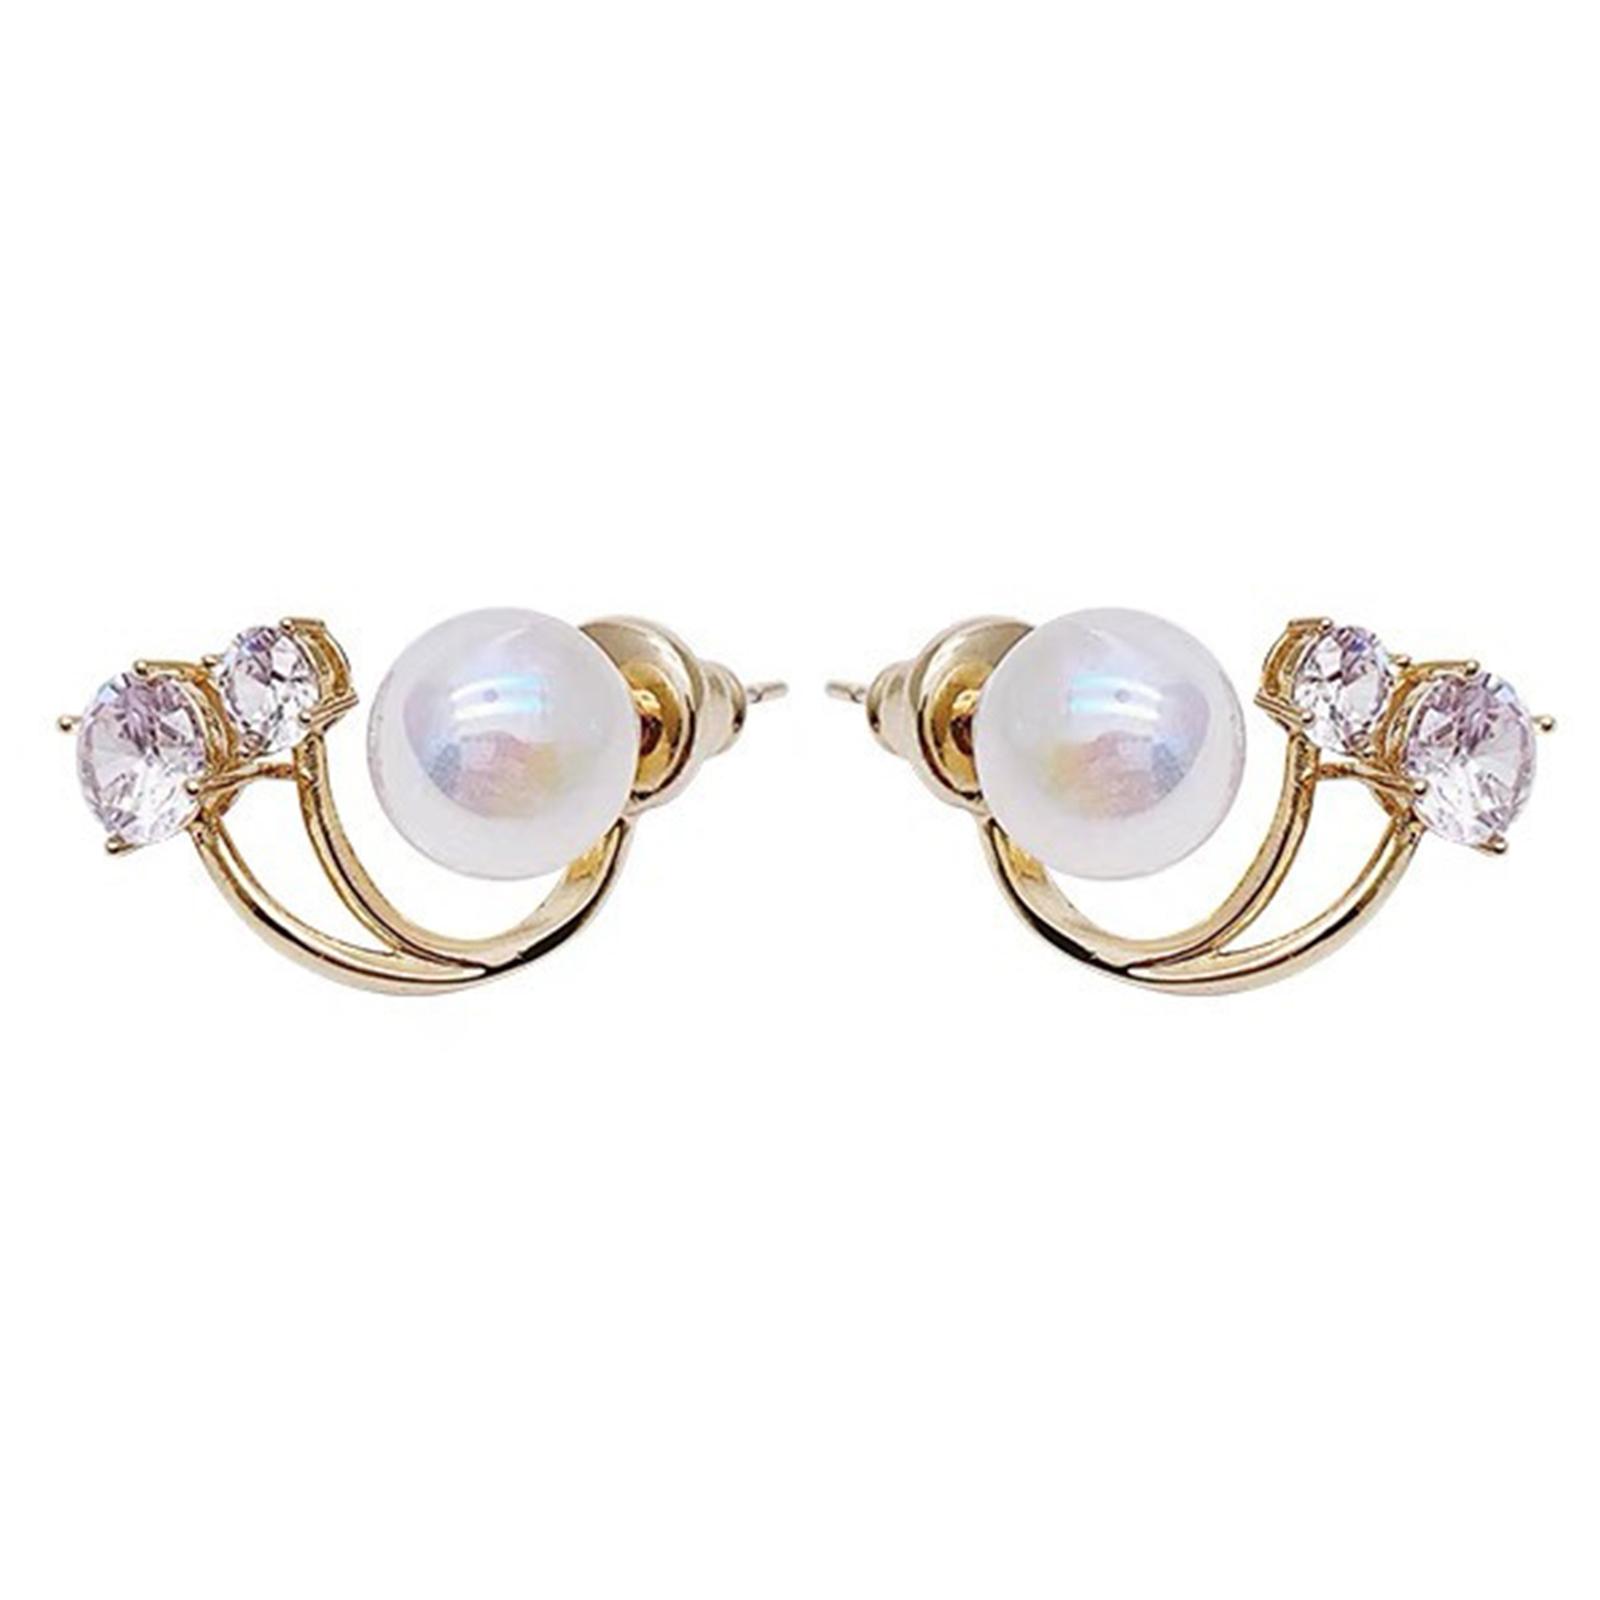 Fashion Rhinestone Crystal Pearl Ear Stud Earrings Jewelry Gift Women G3C9 - image 1 of 9